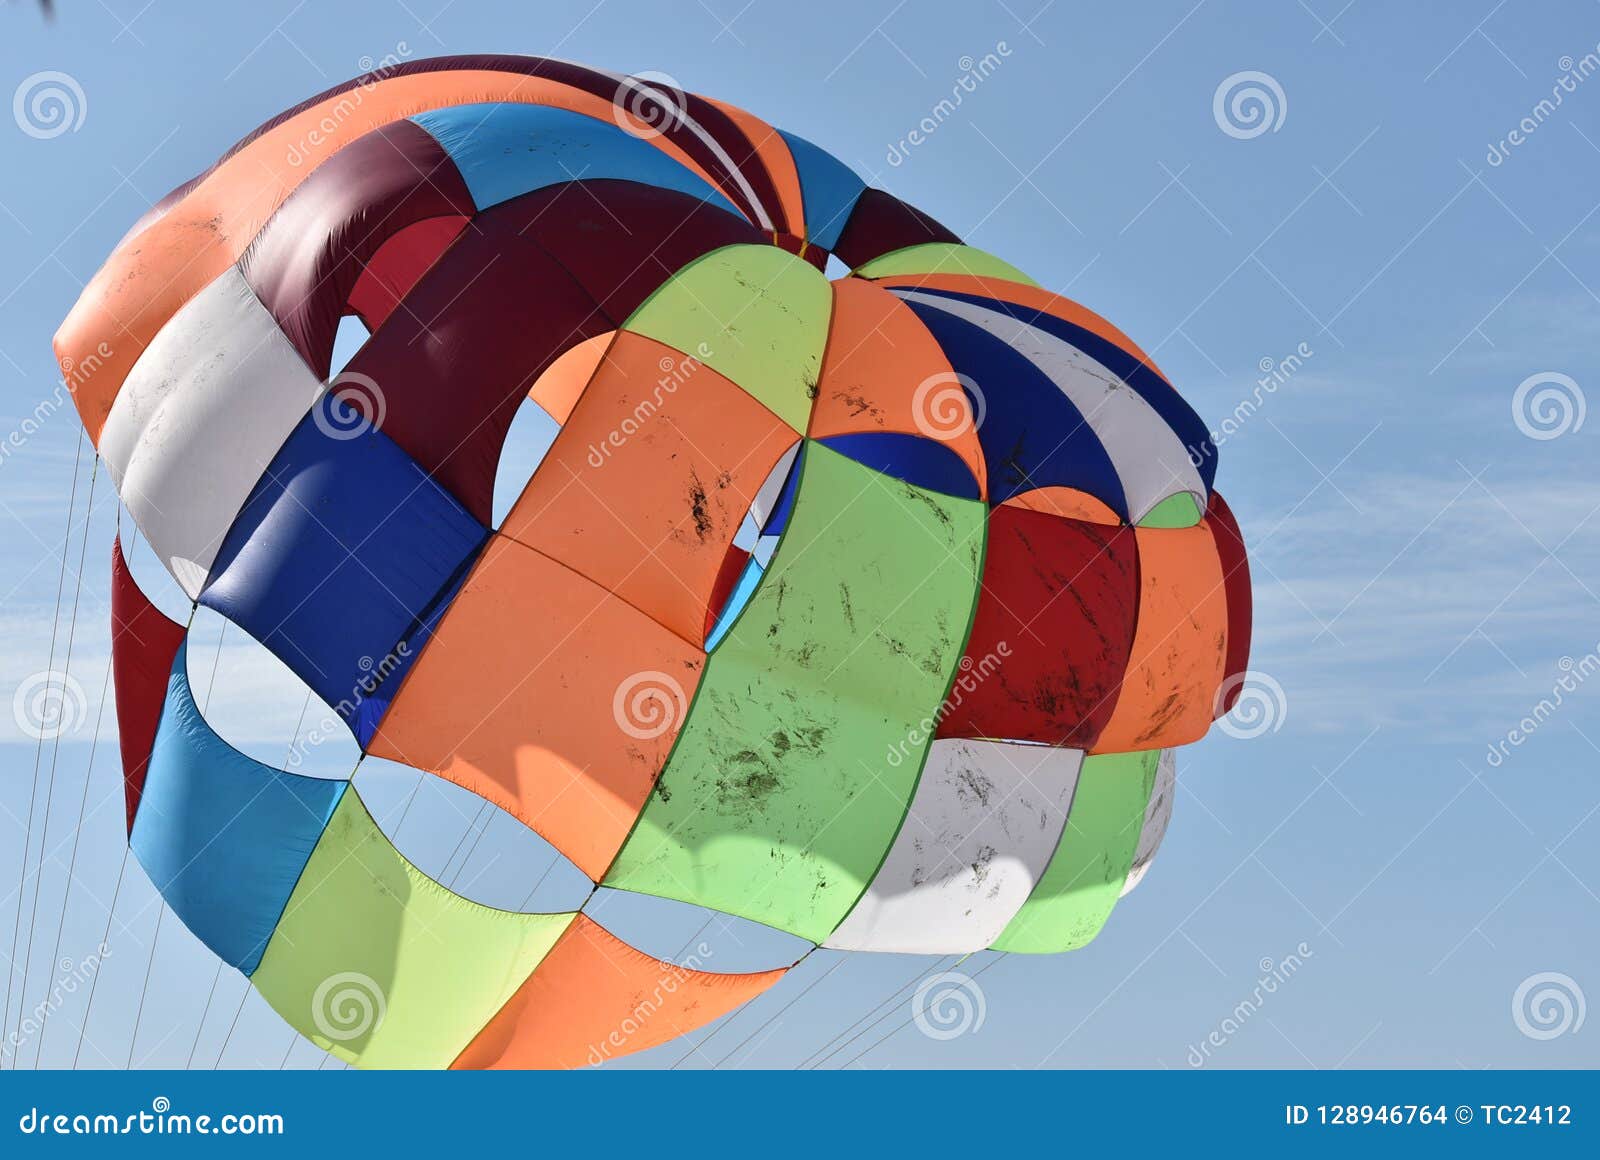 multicolored parasail in flight